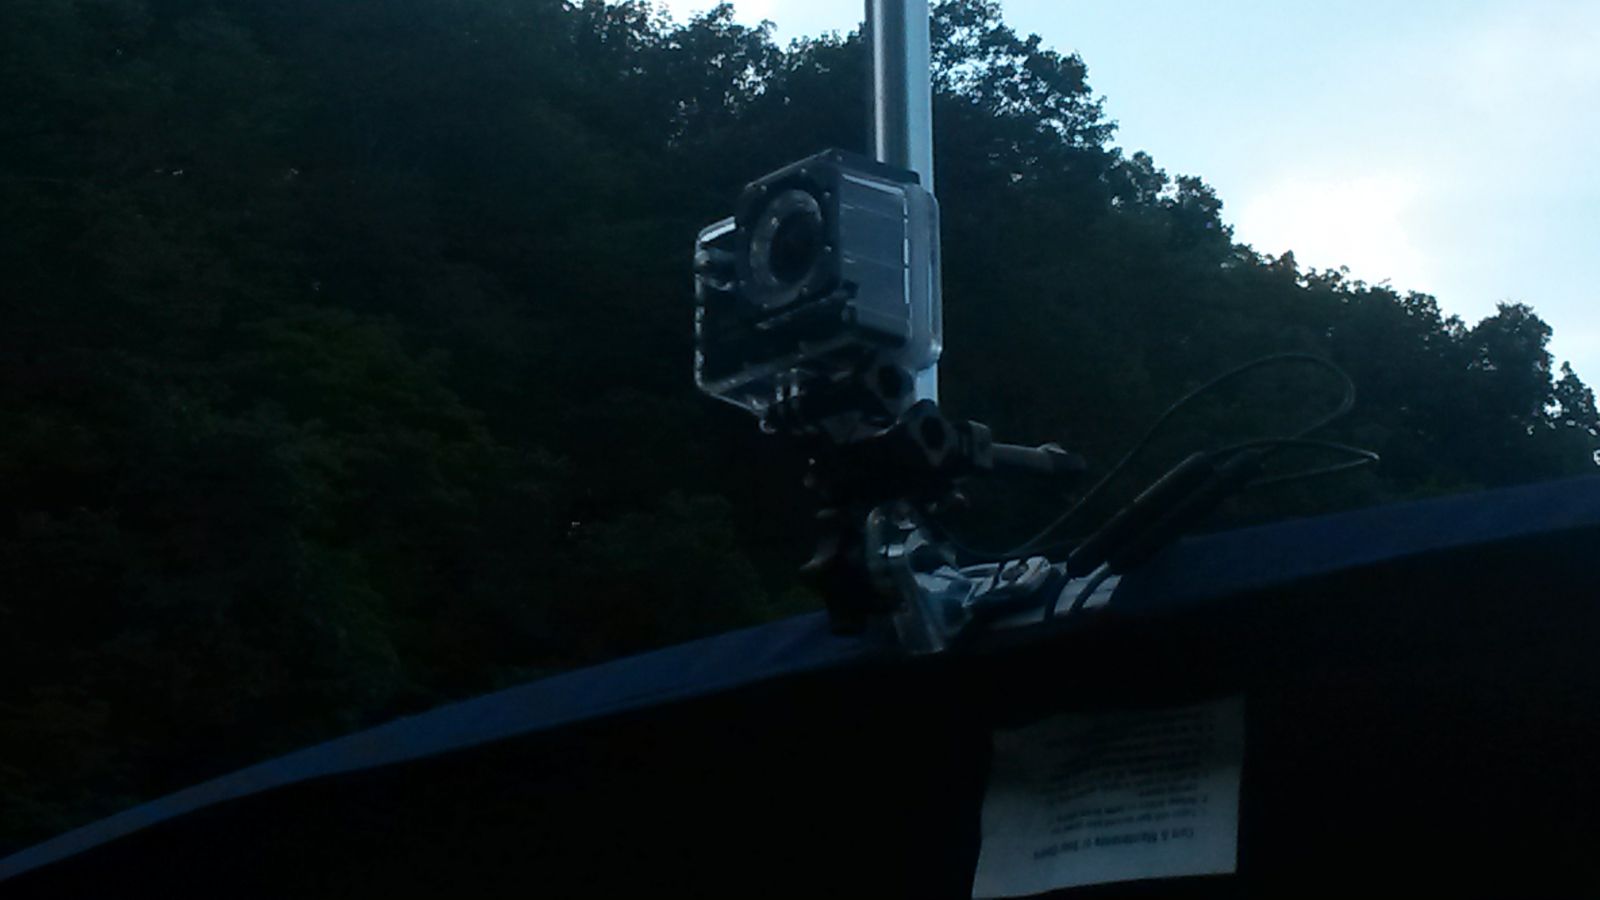 SJ4000 rear view camera